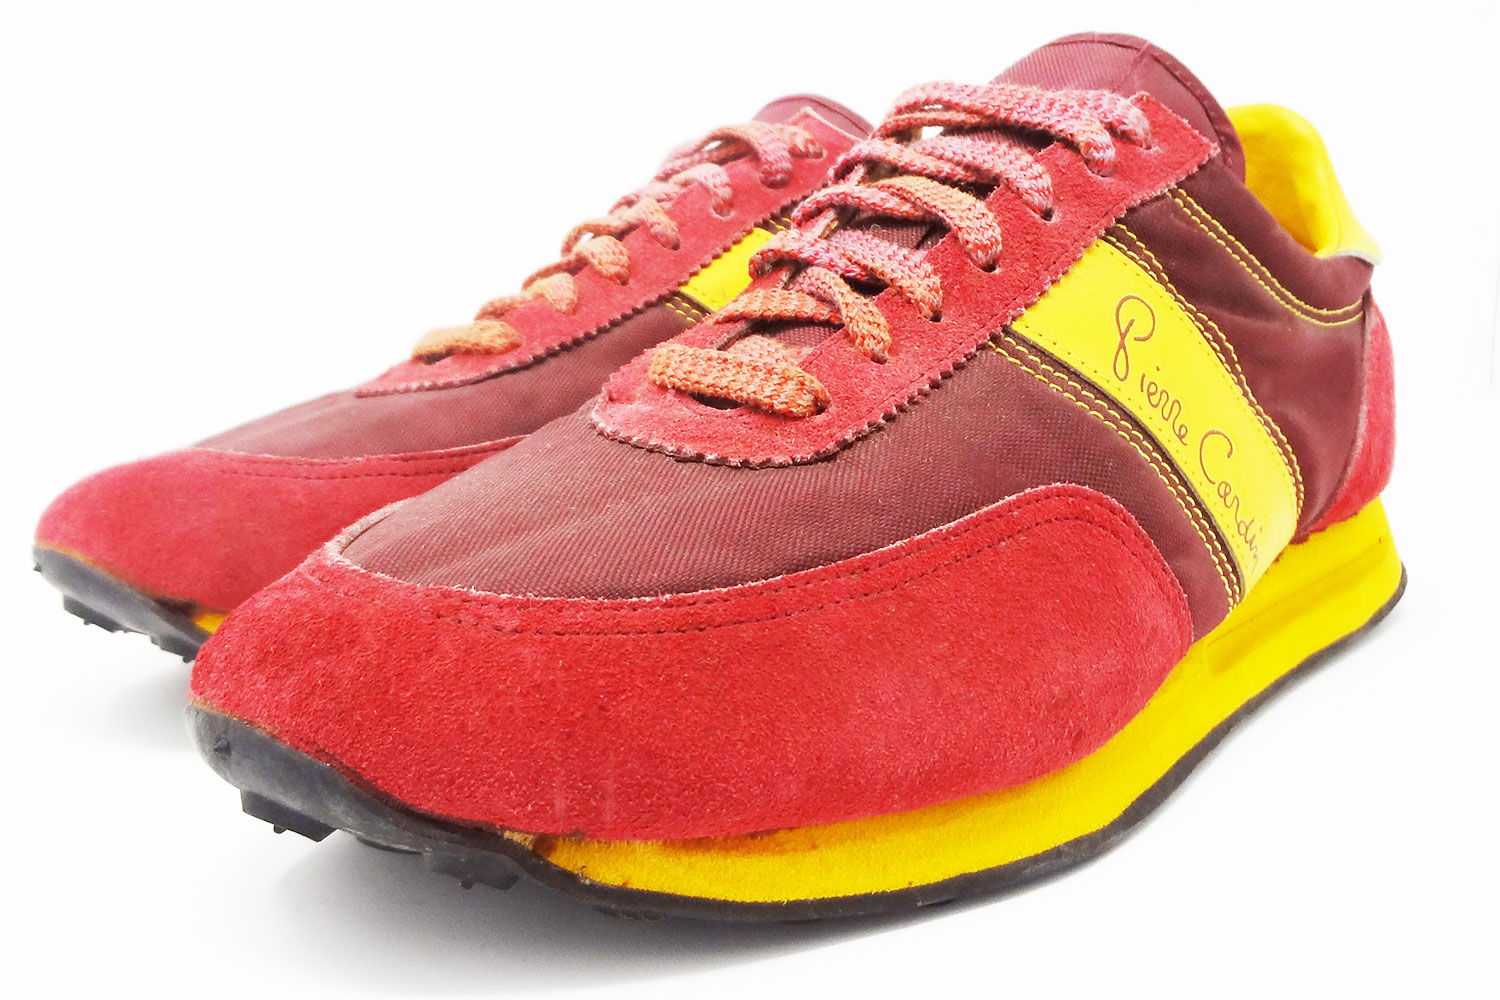 Rare 80s Pierre Cardin vintage sneakers @ The Deffest